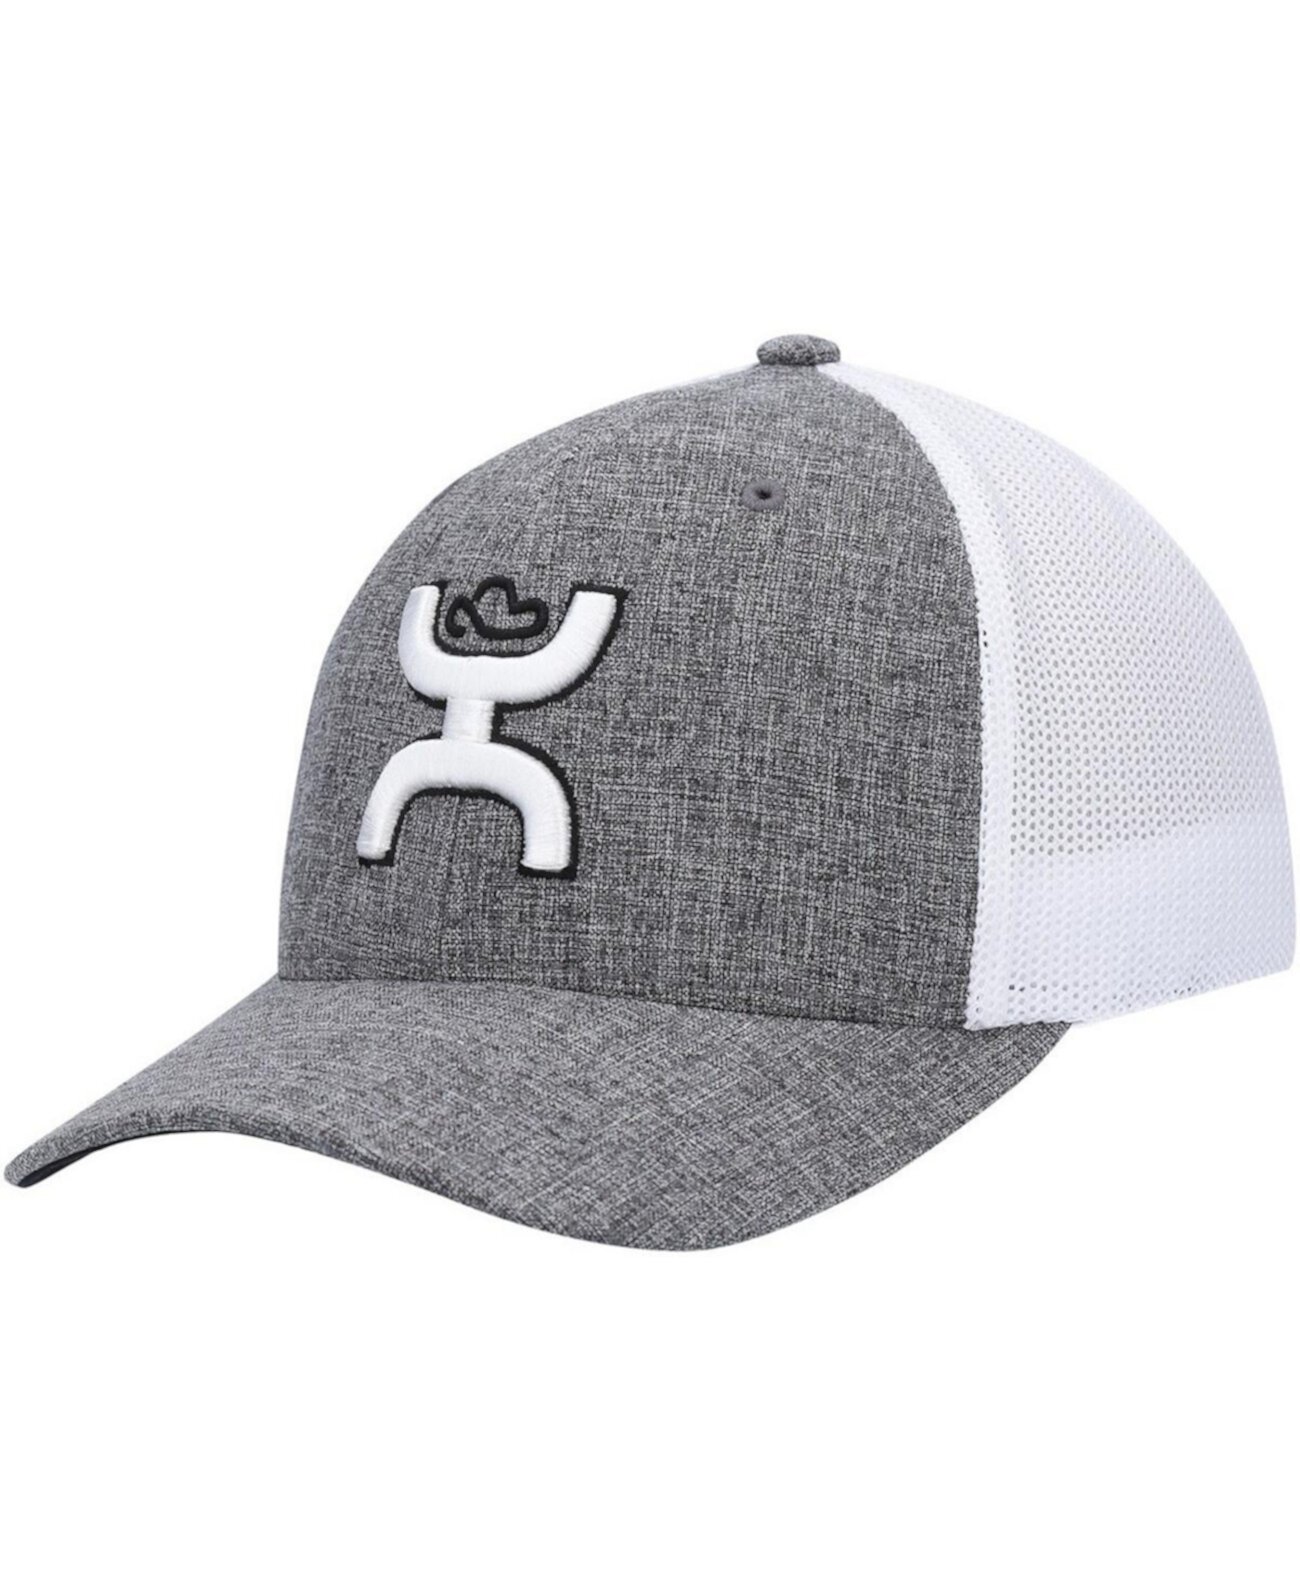 Мужская шляпа цвета «Heather Charcoal», белая кепка Cayman Flex Hooey